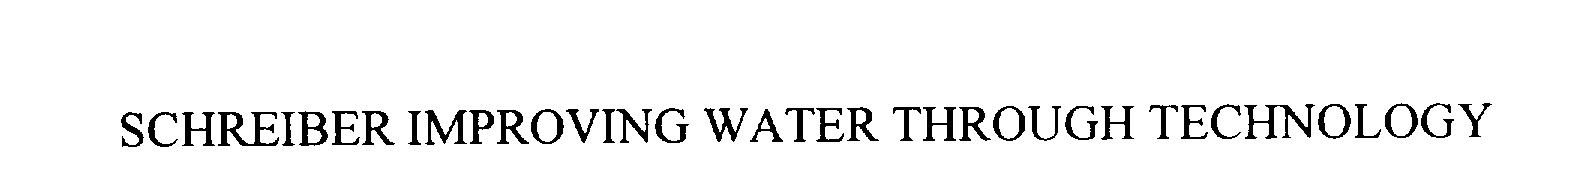  SCHREIBER IMPROVING WATER THROUGH TECHNOLOGY